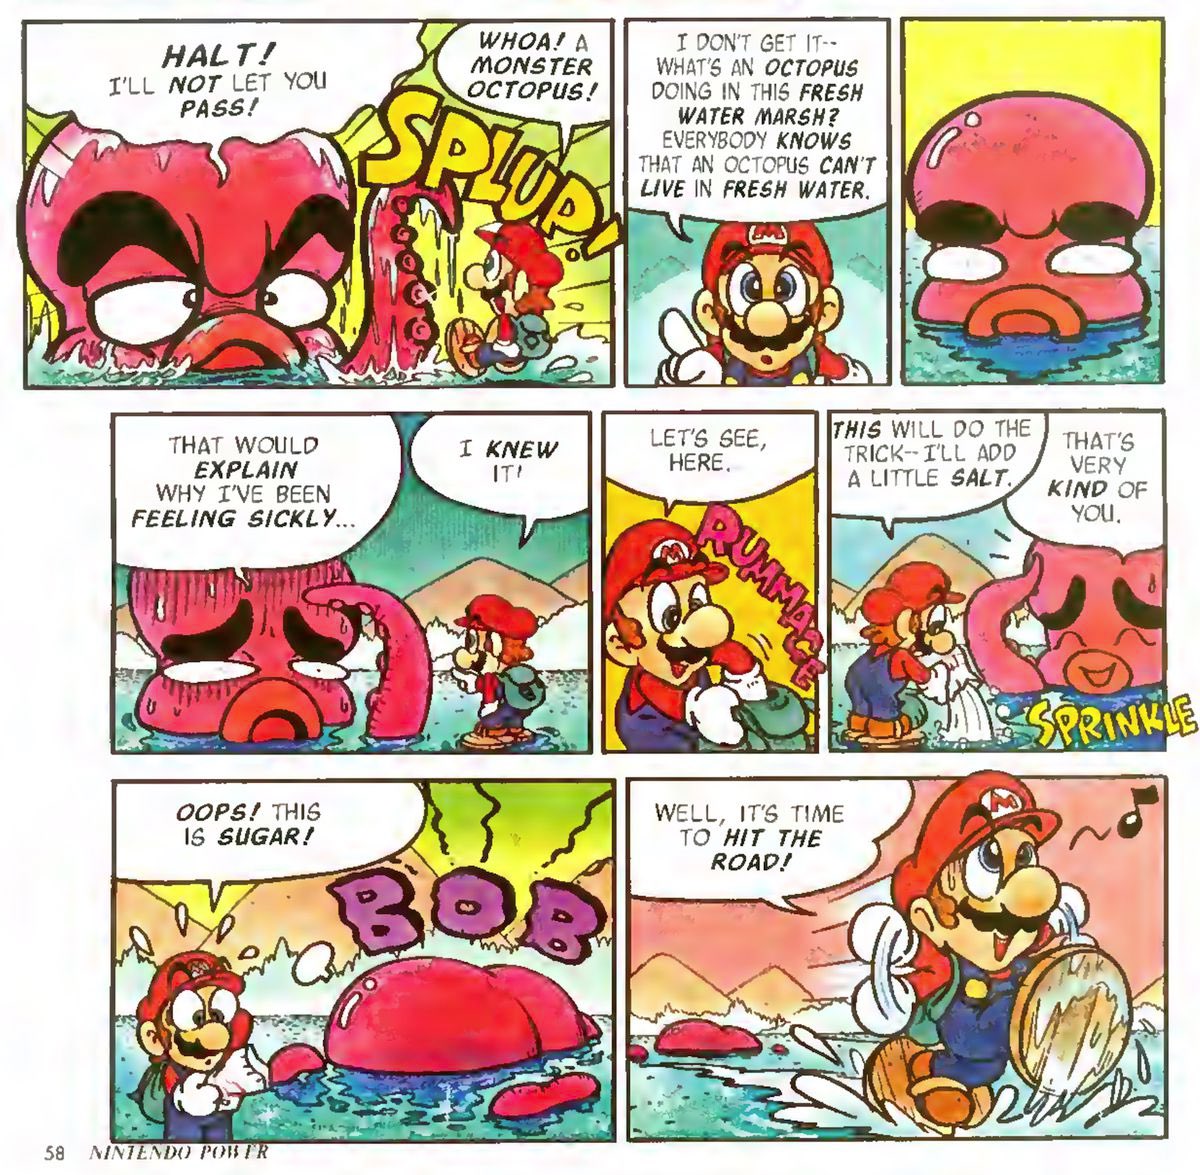 Mario killing(?) an octopus. - Mario vs Wario Nintendo Power Comics